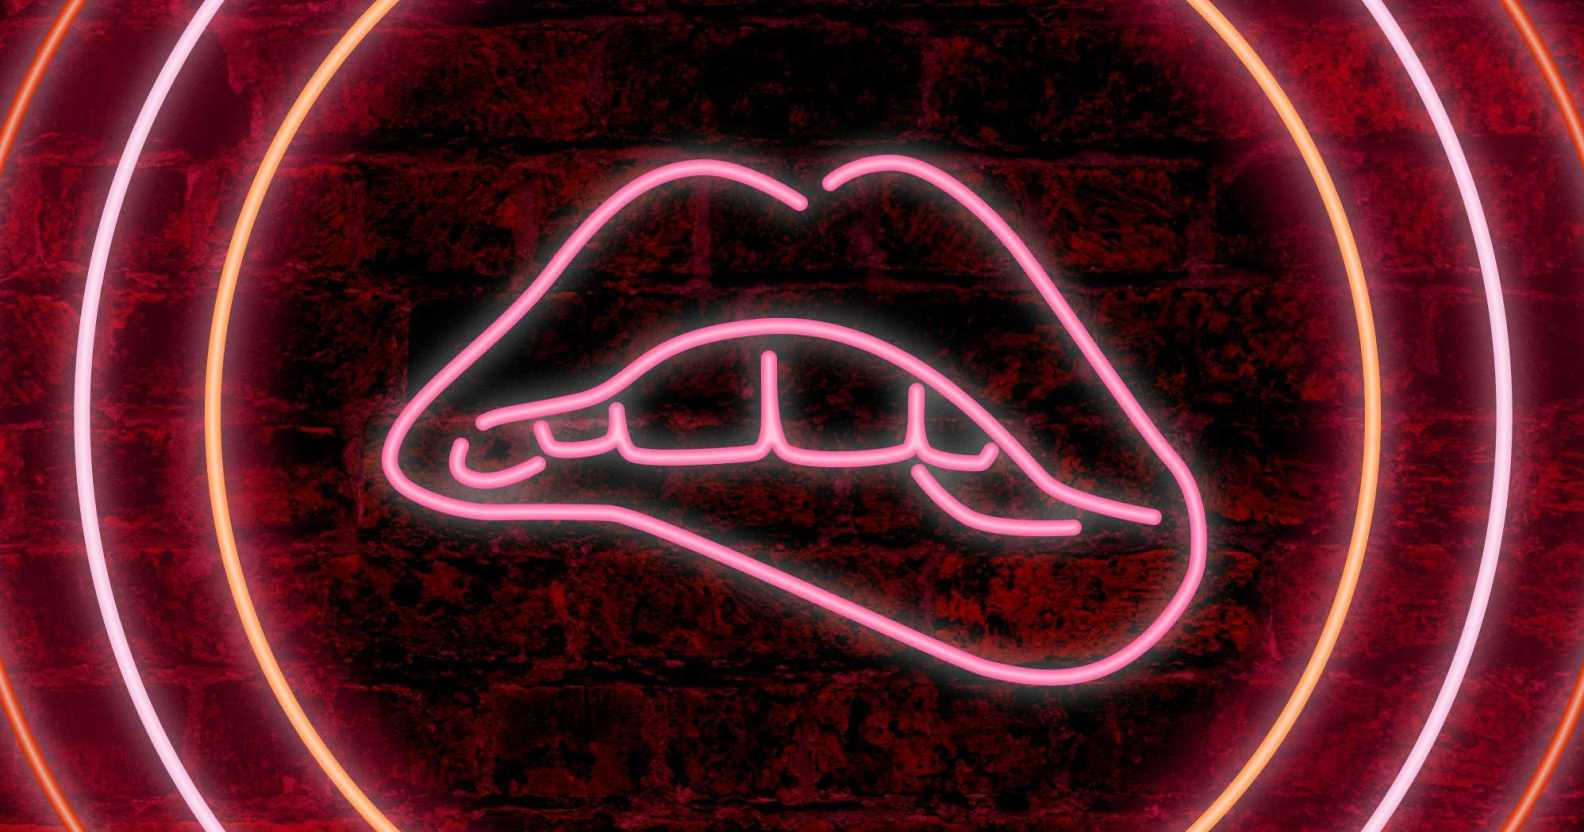 A neon sign of teeth biting lips